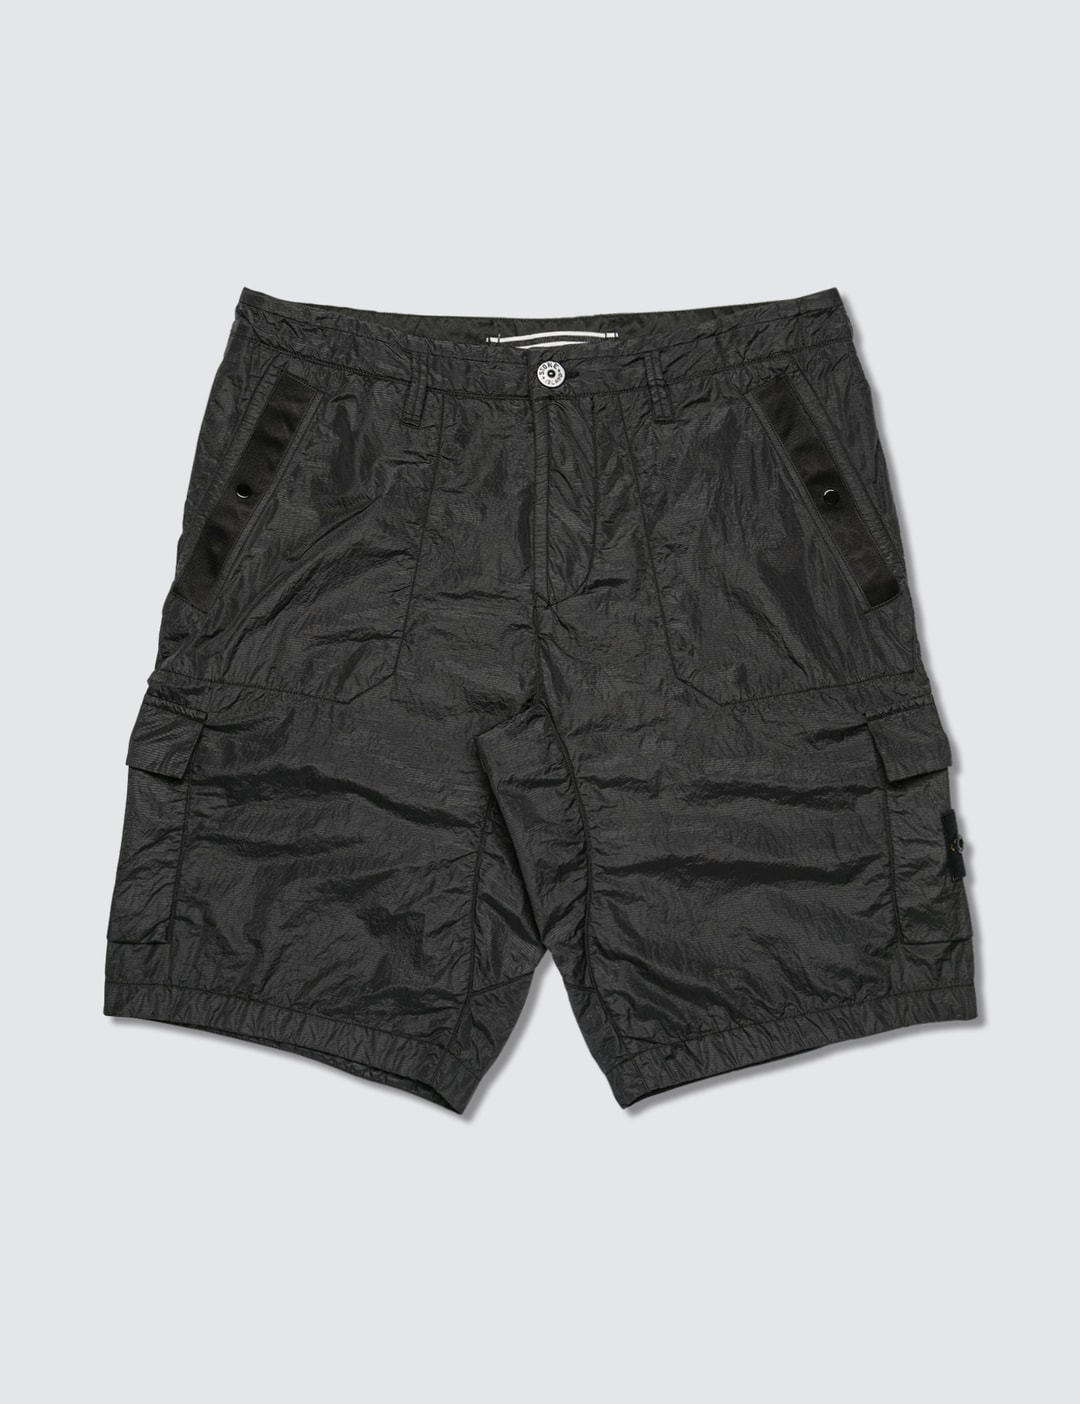 Stone Island - Cargo Bermuda Shorts | HBX - Globally Curated Fashion ...